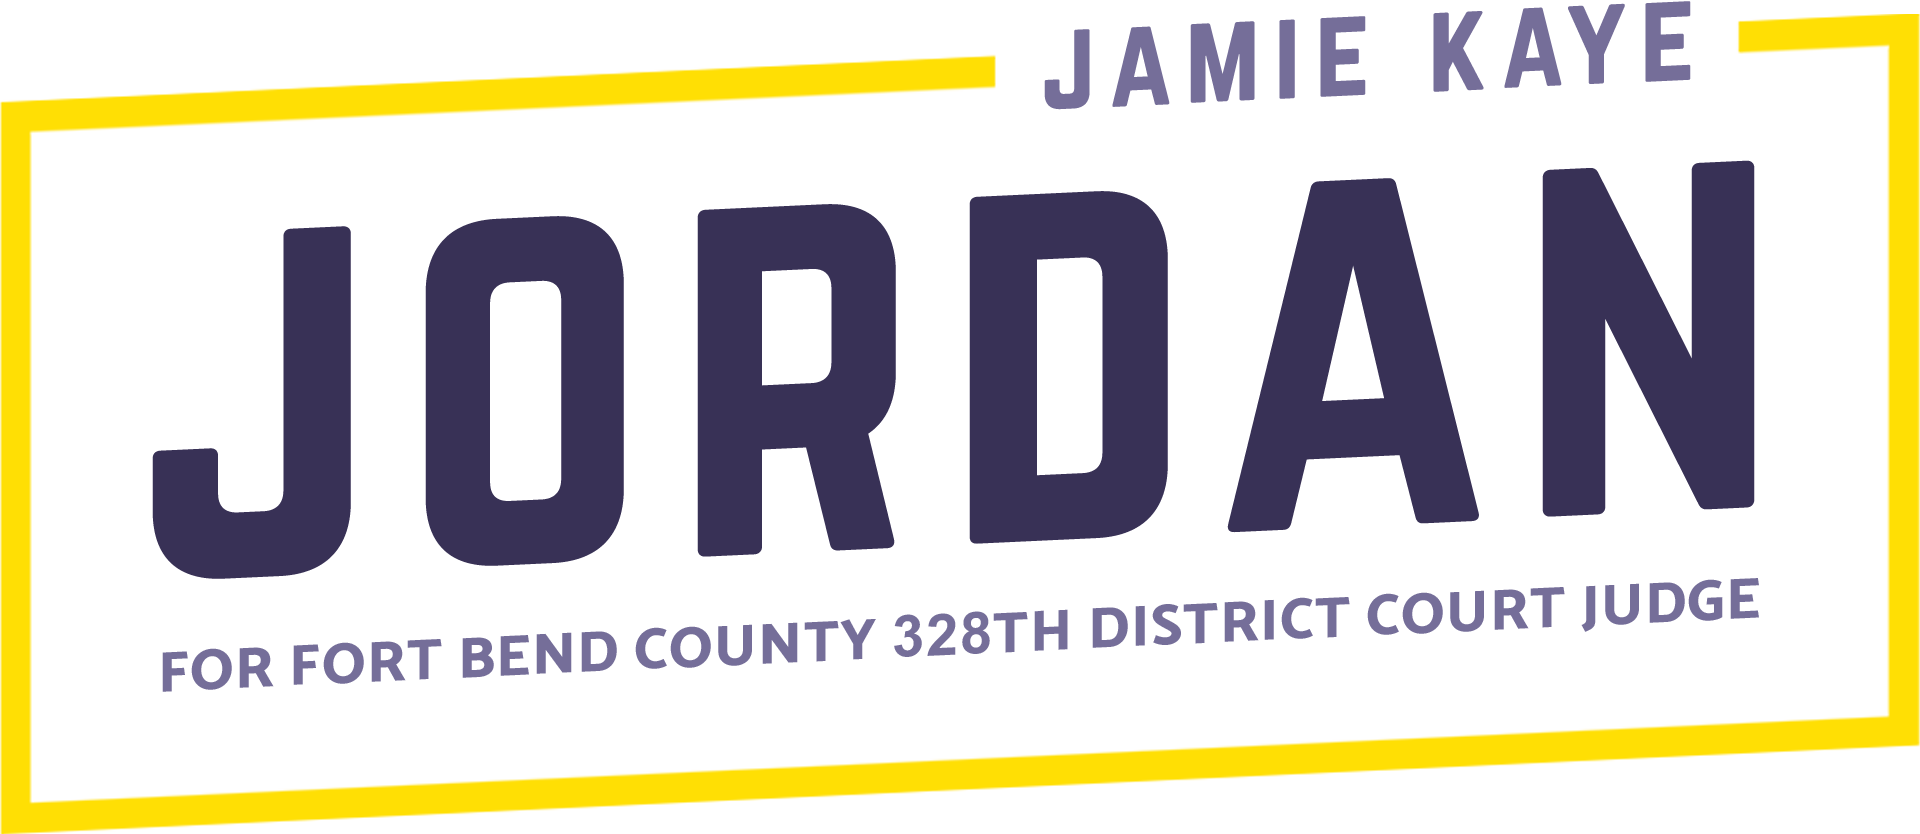 Jamie Kaye Jordan for Judge logo